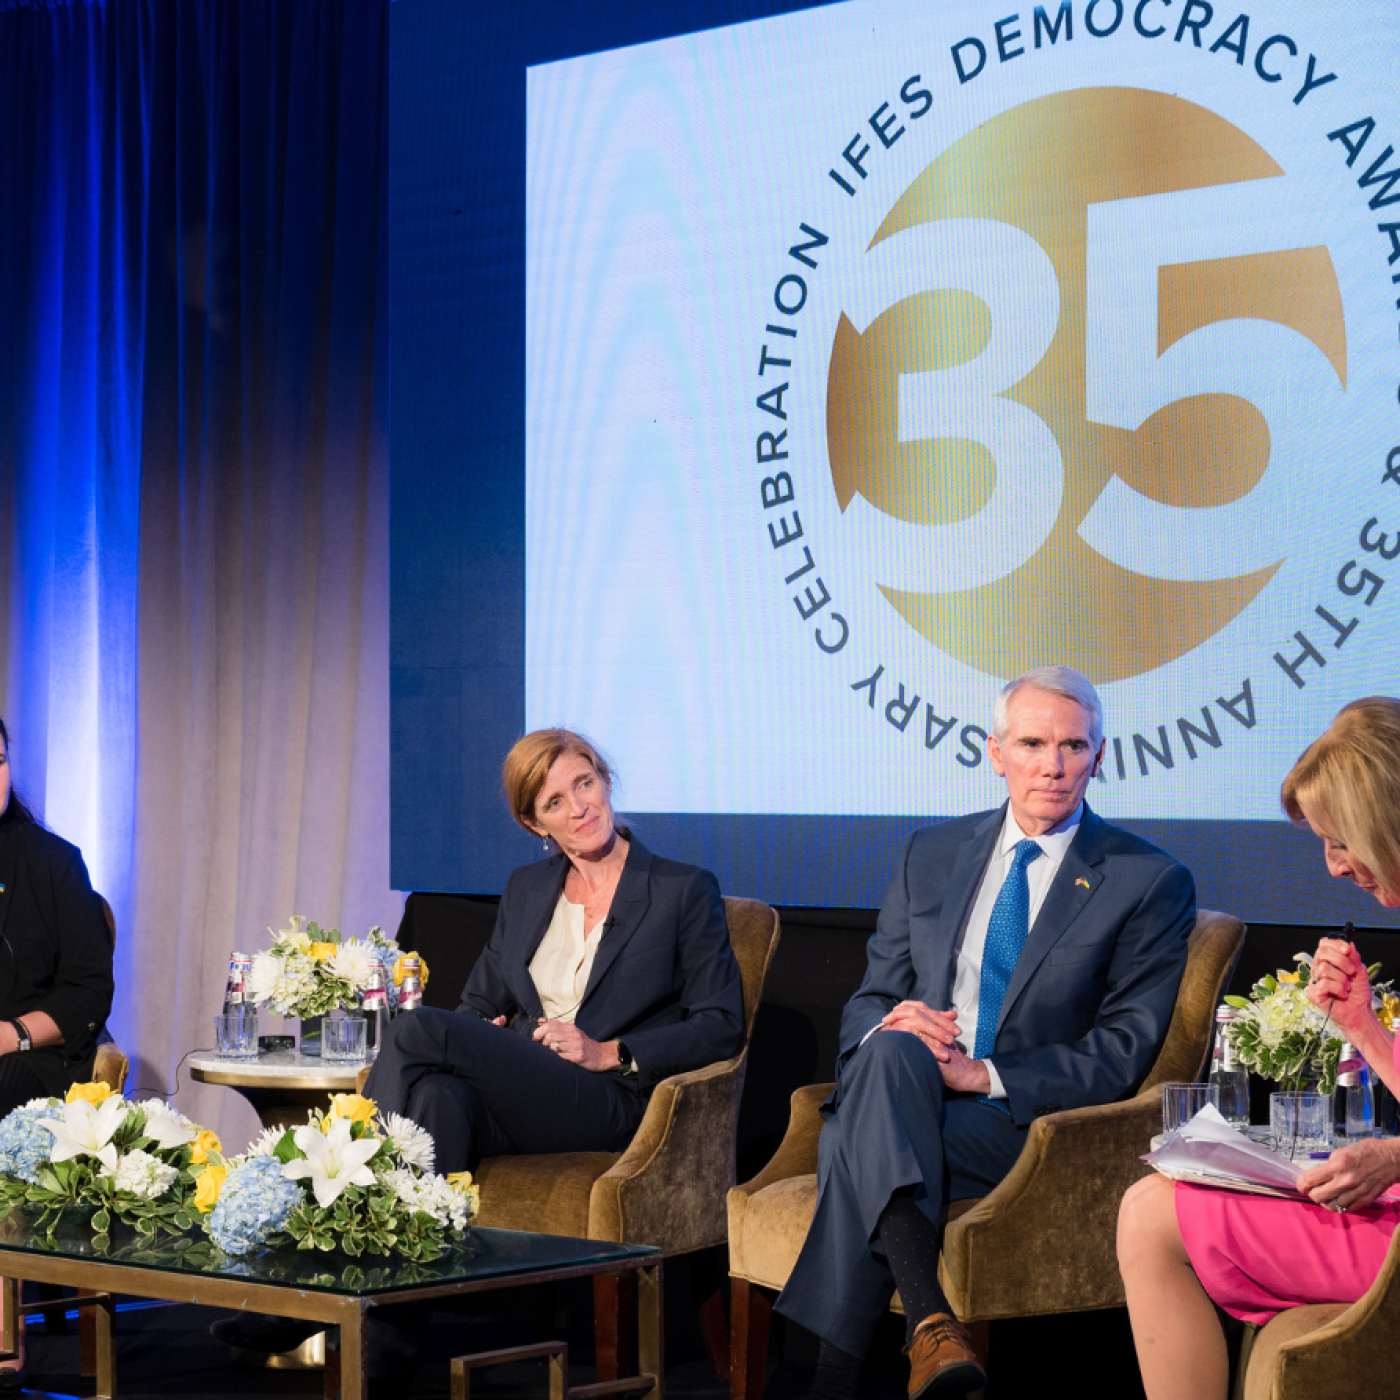 Democracy Awards Dinner panel phot with Markarova, Power, Portman, and Woodruff